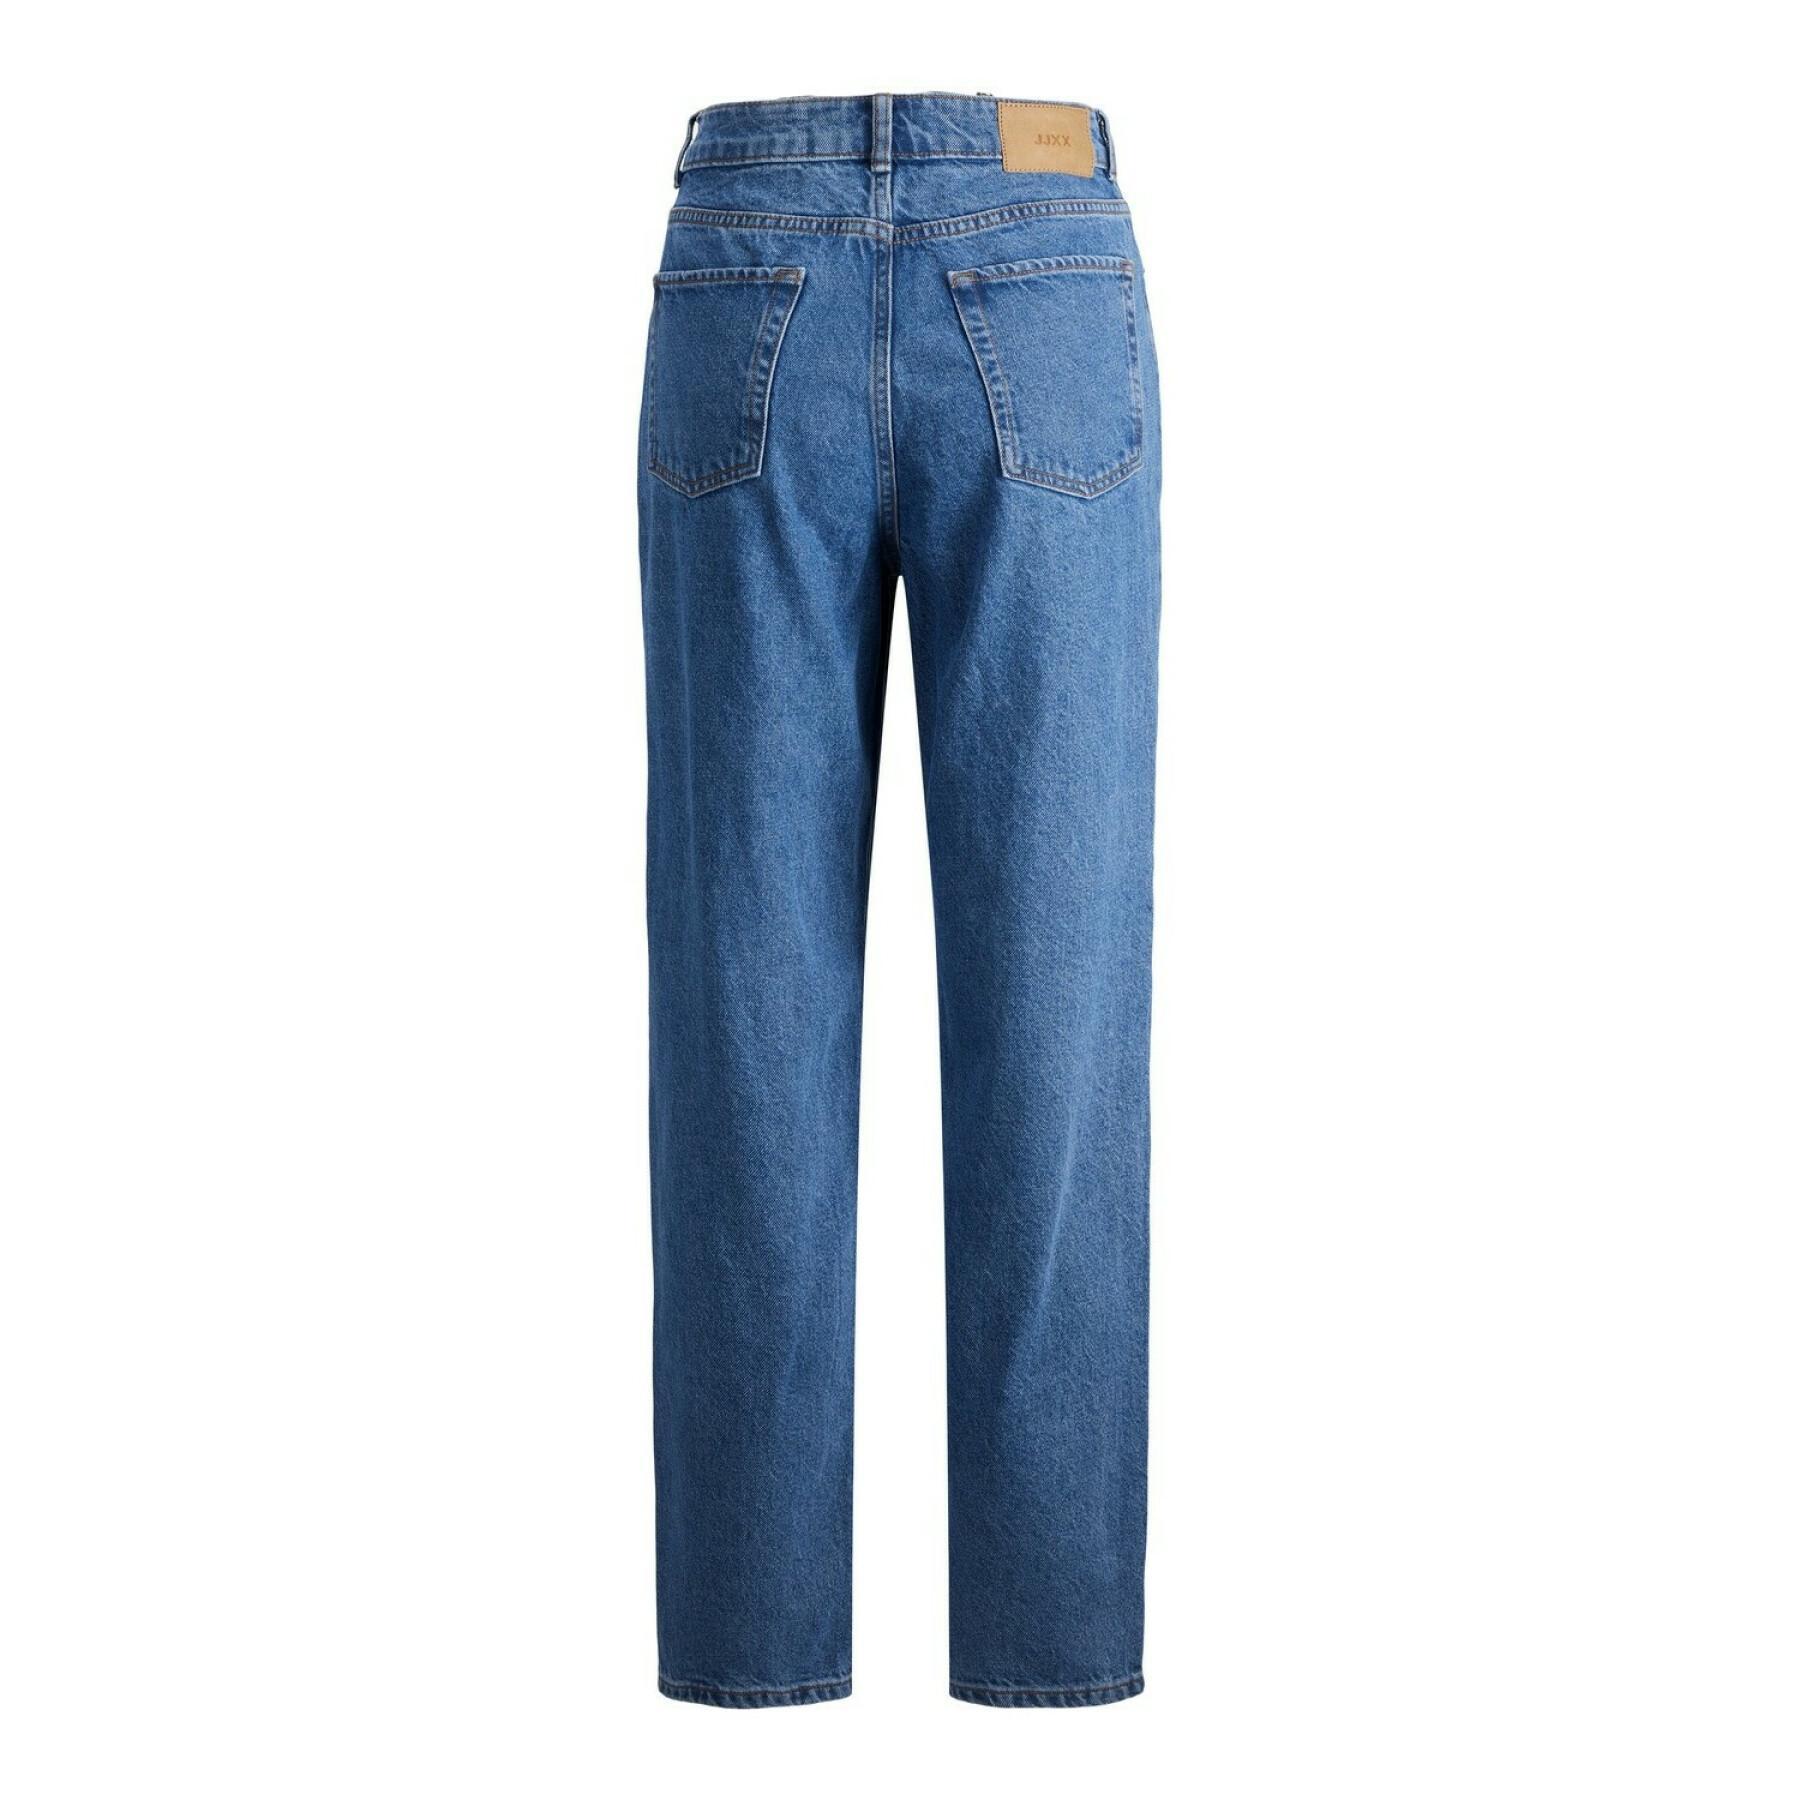 Women's jeans JJXX lisbon mom nr4002